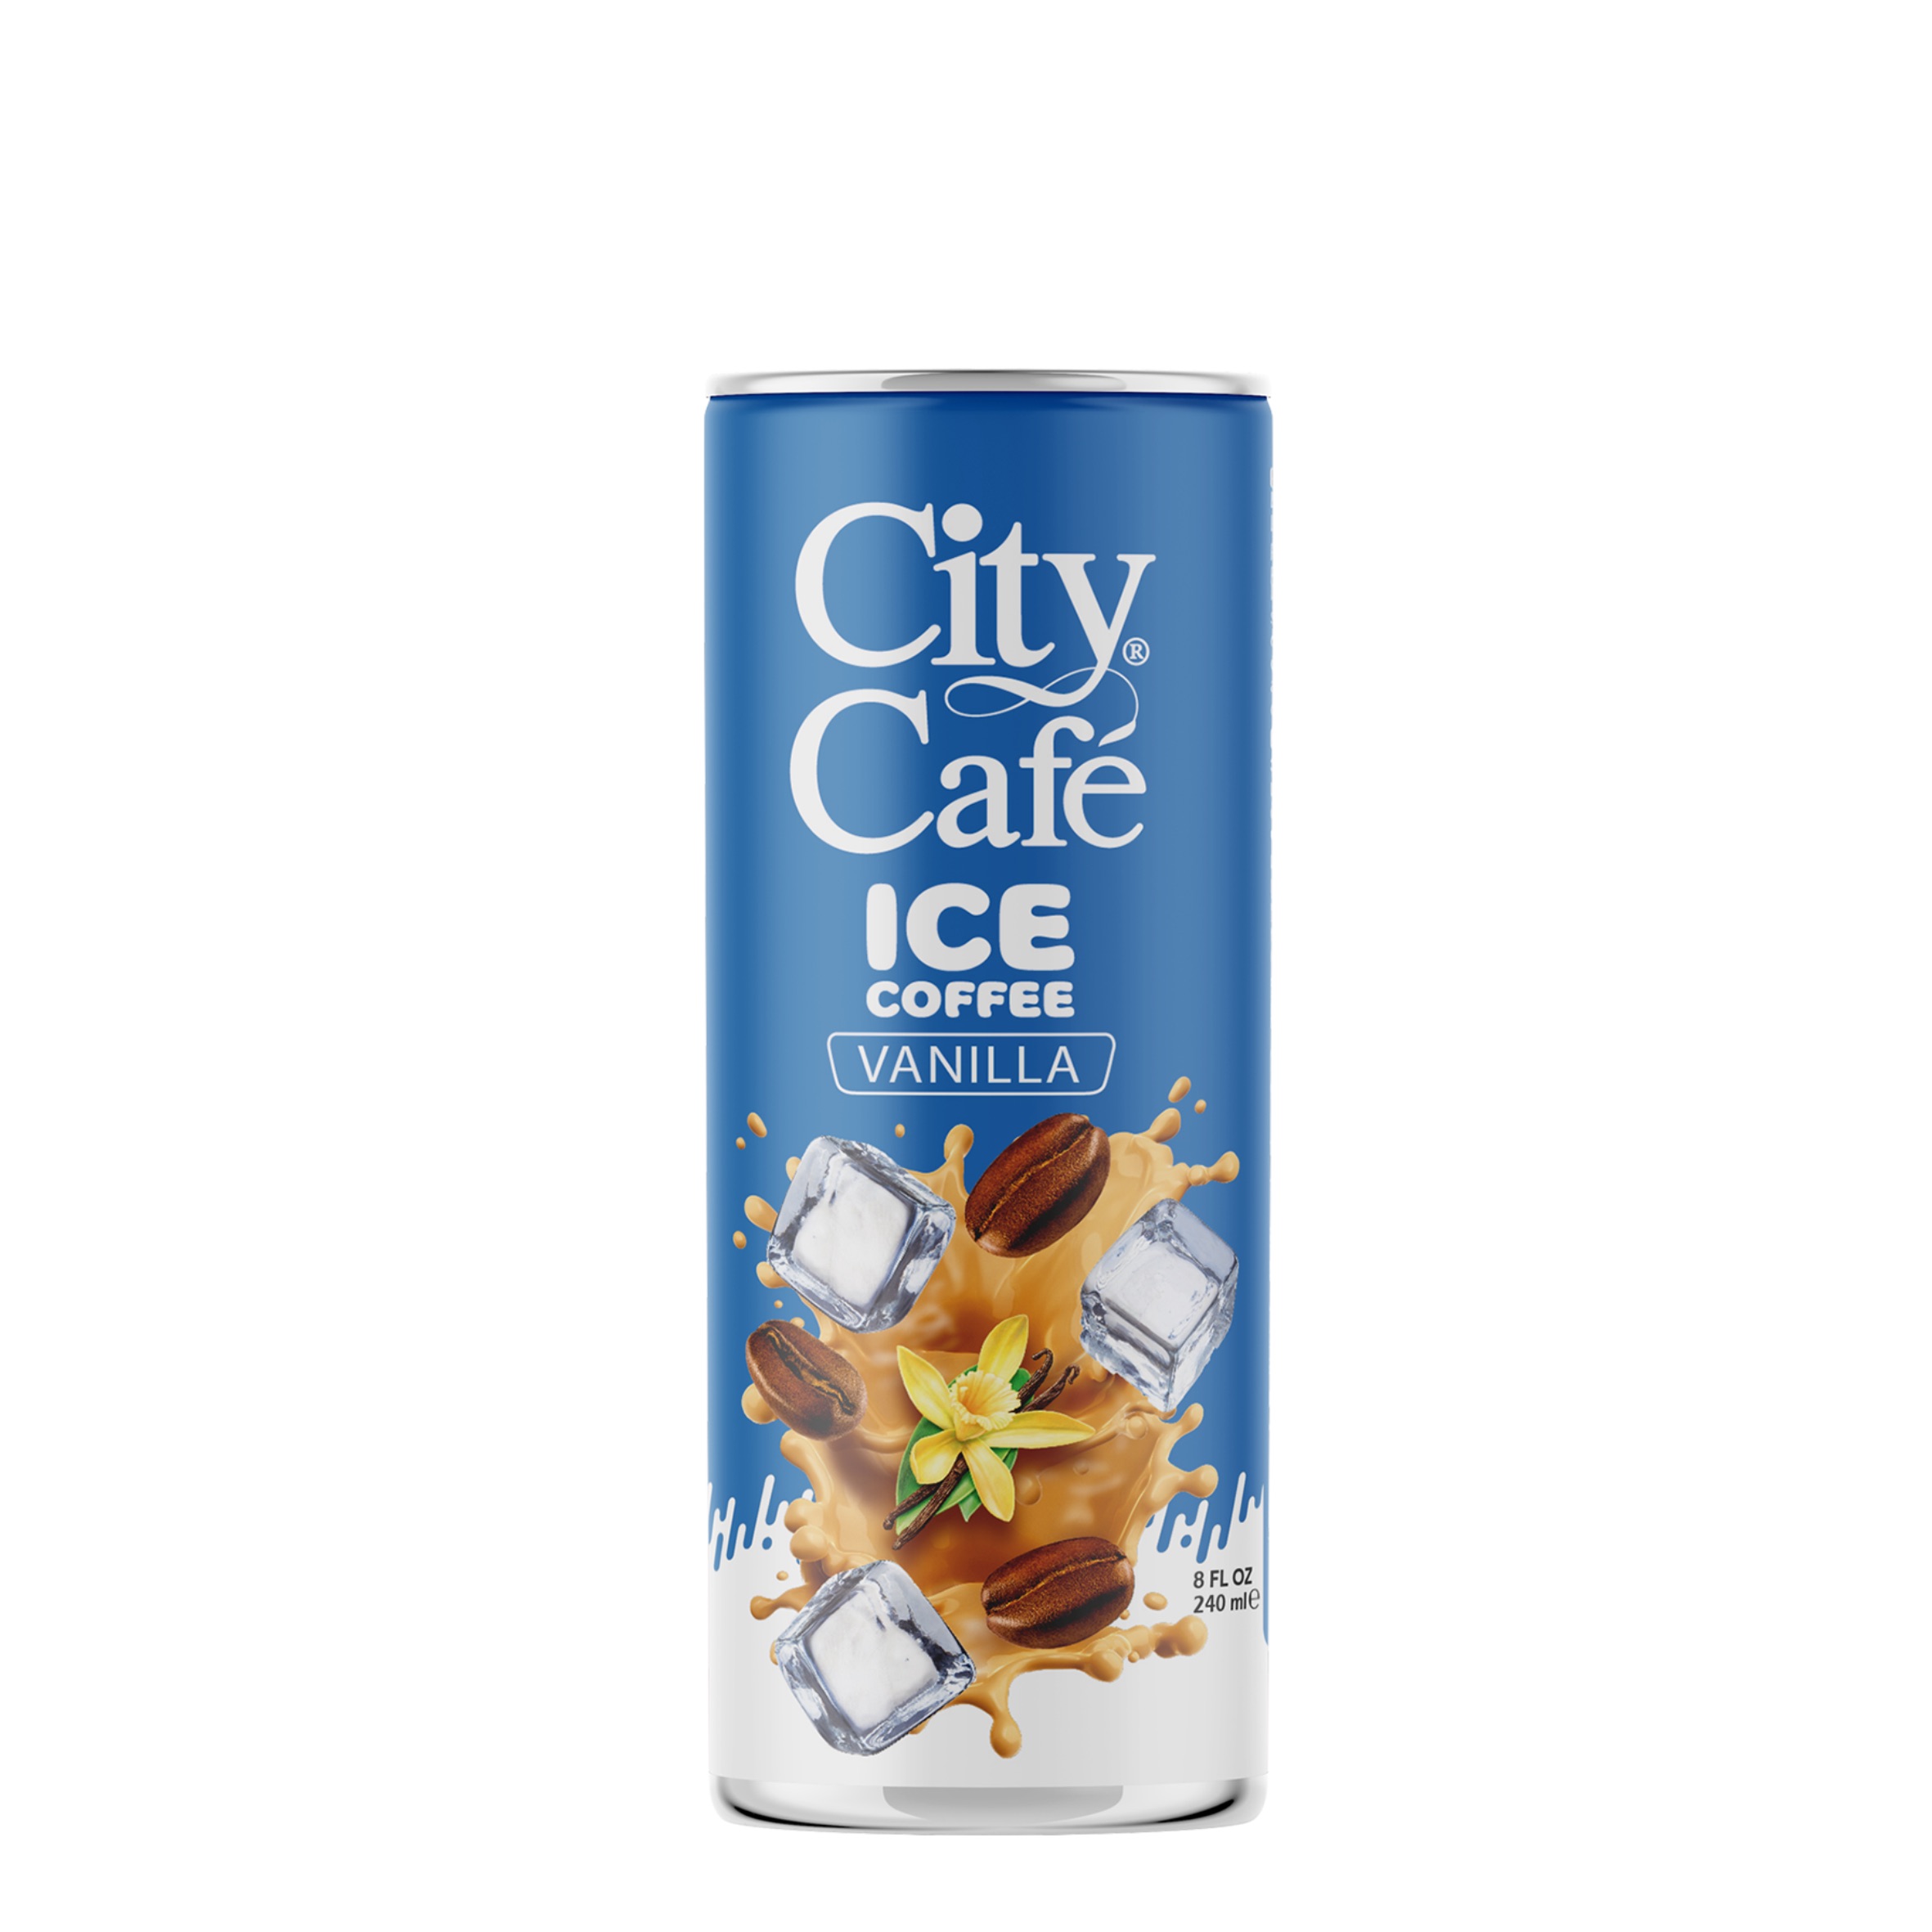 City café Ice Coffee - Vanilla 